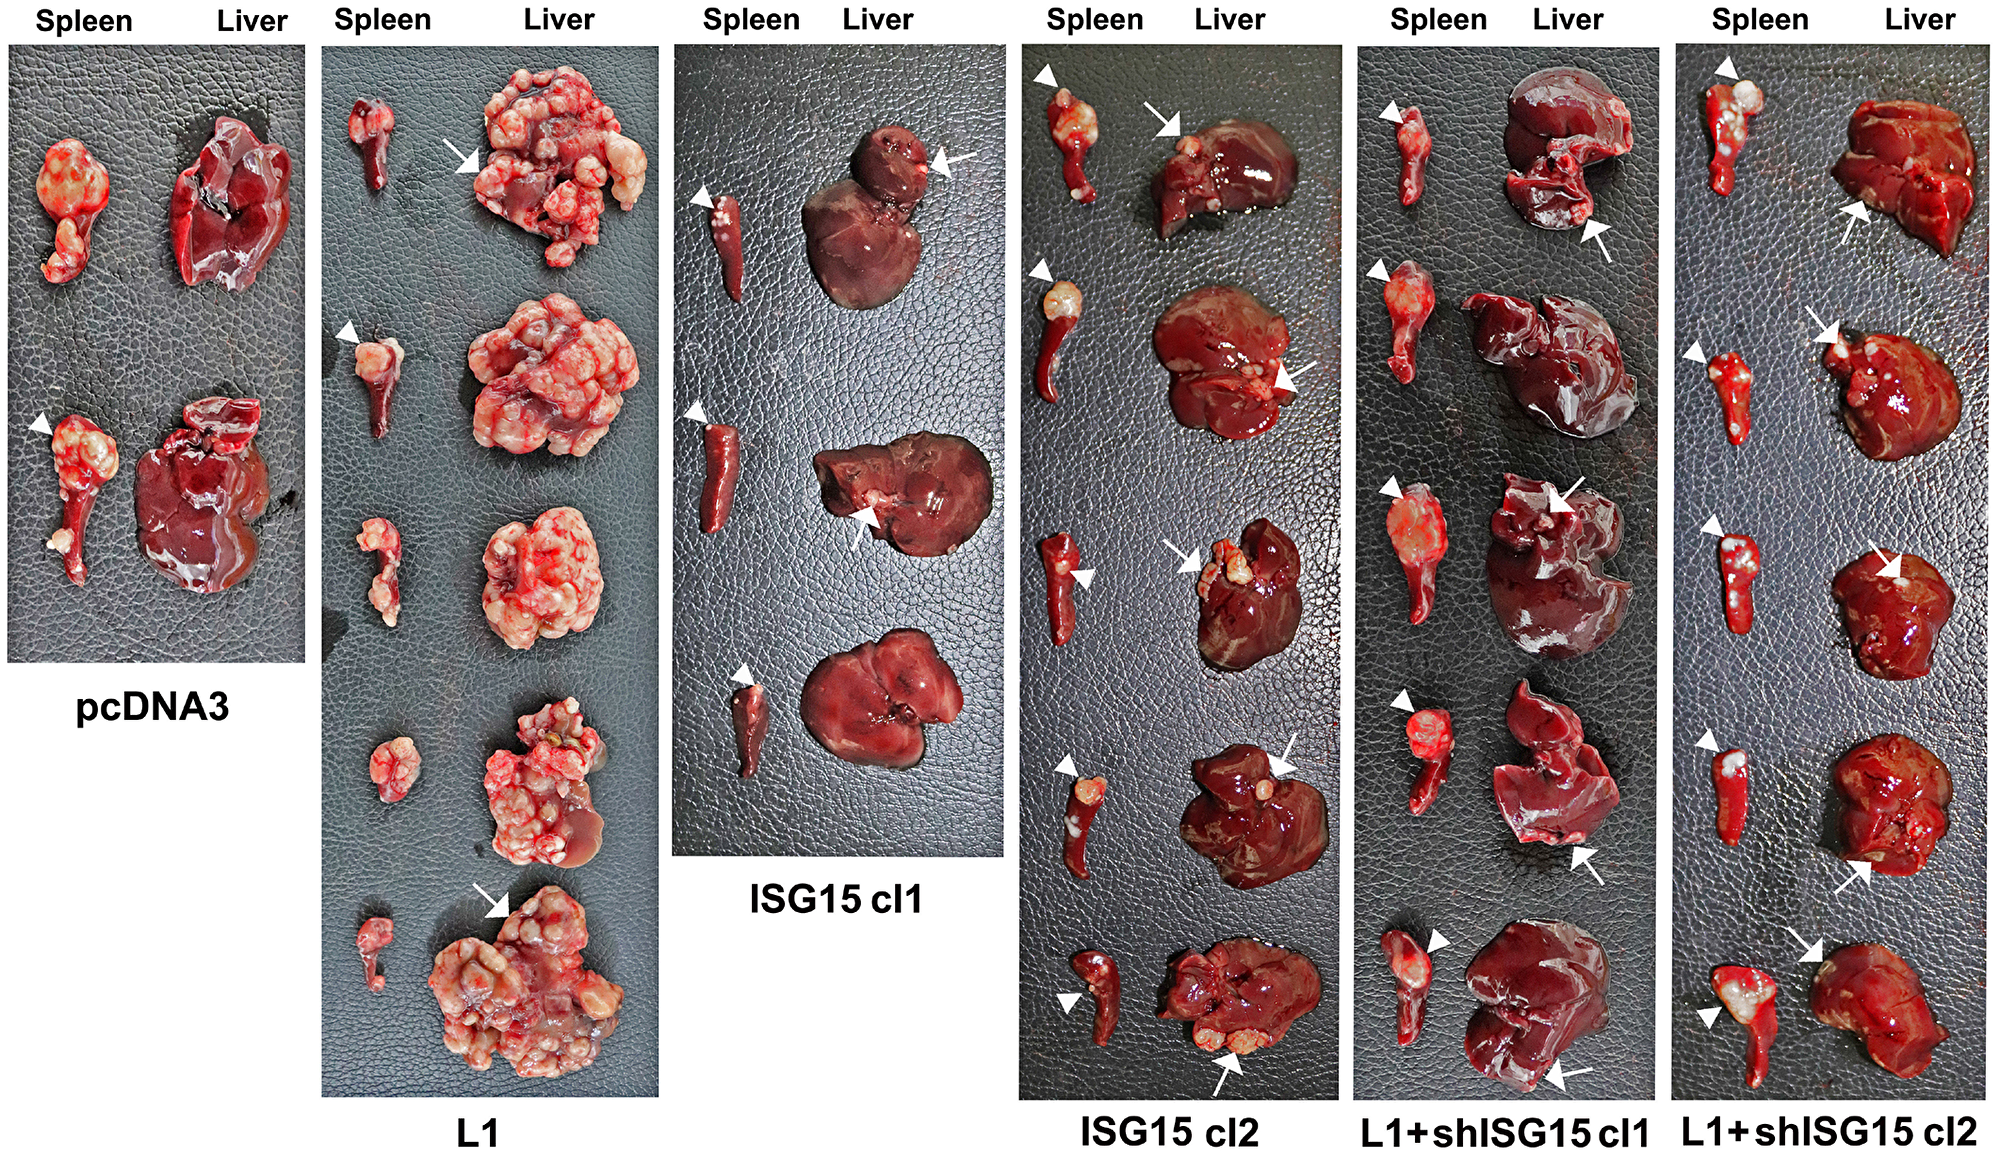 Overexpression of ISG15 enhances liver metastasis of CRC cells and ISG15 suppression in L1-overexpressing cells blocks metastasis.